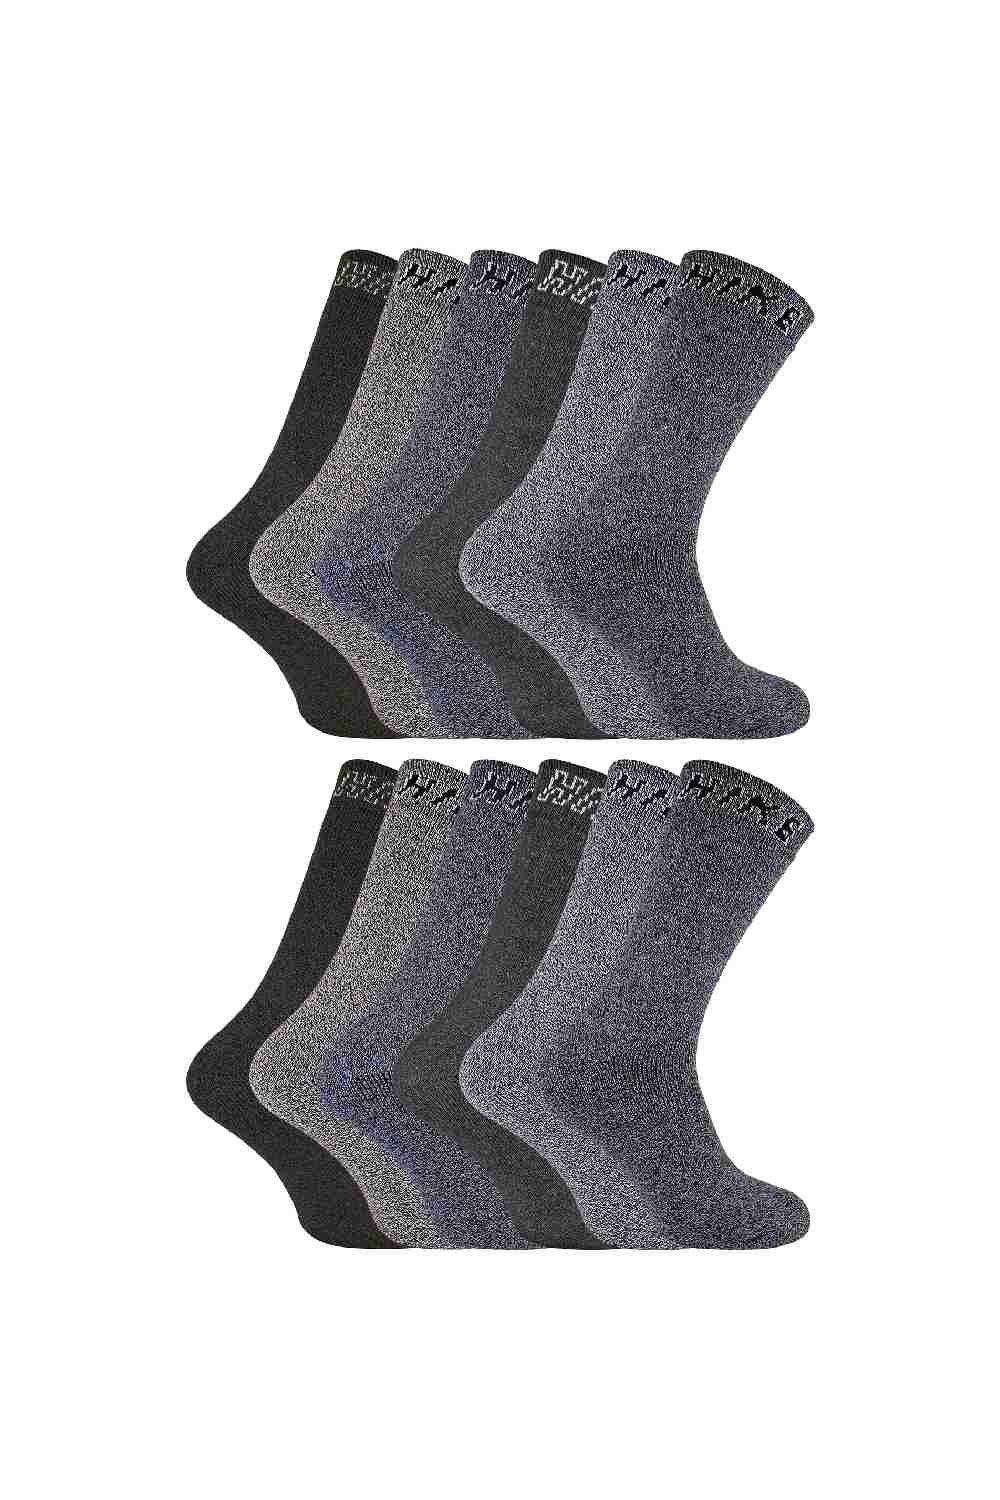 12 Pairs Cushioned Hiking Socks - Breathable Boot Socks